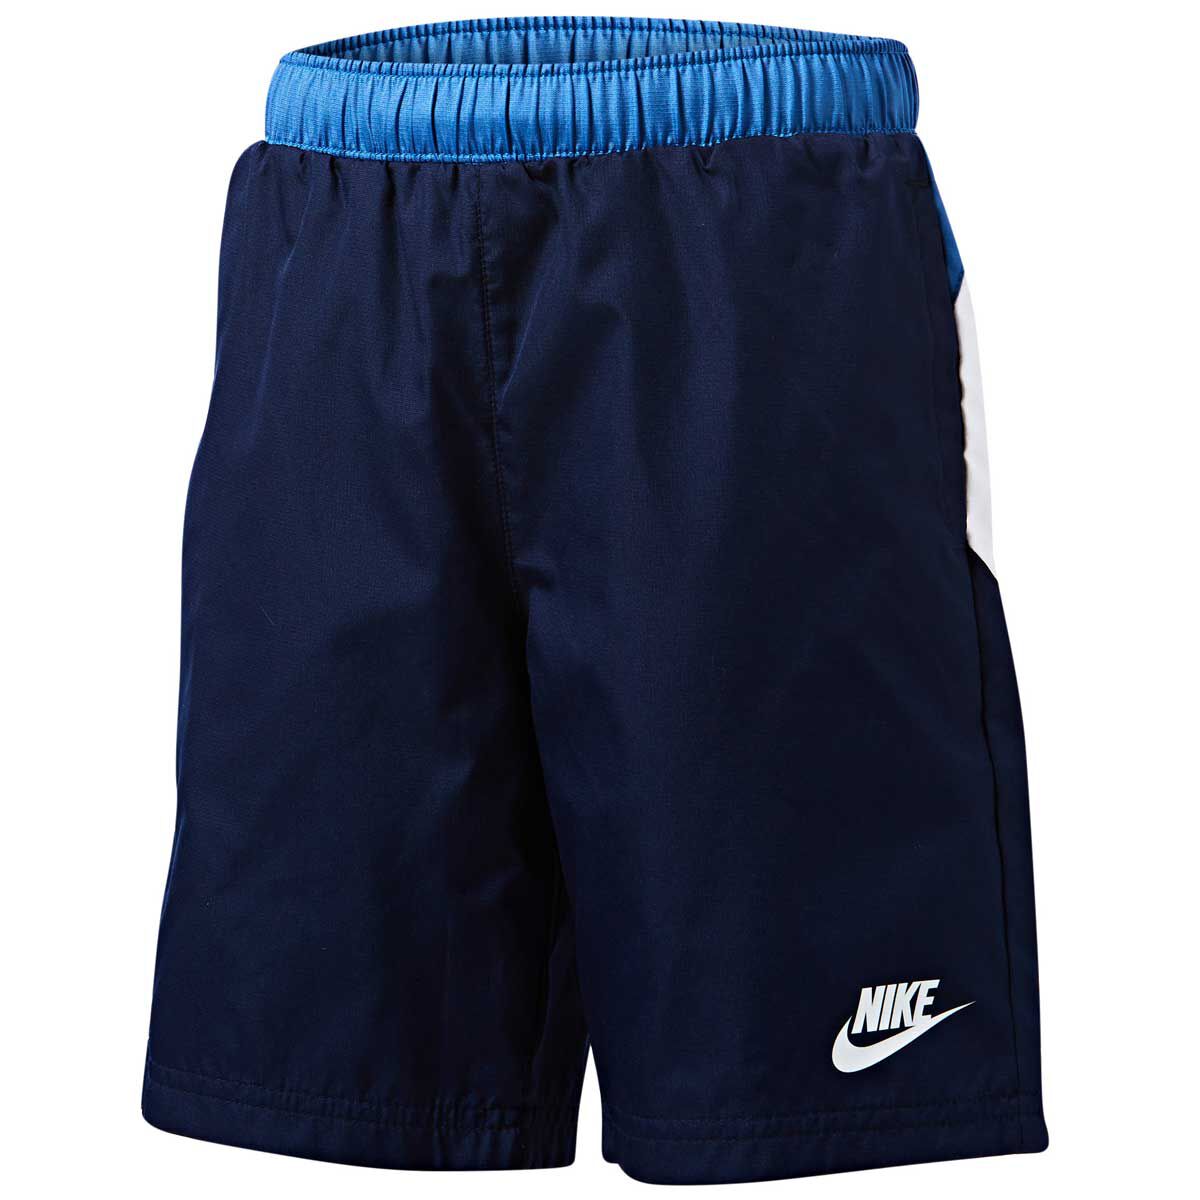 boys navy blue nike shorts